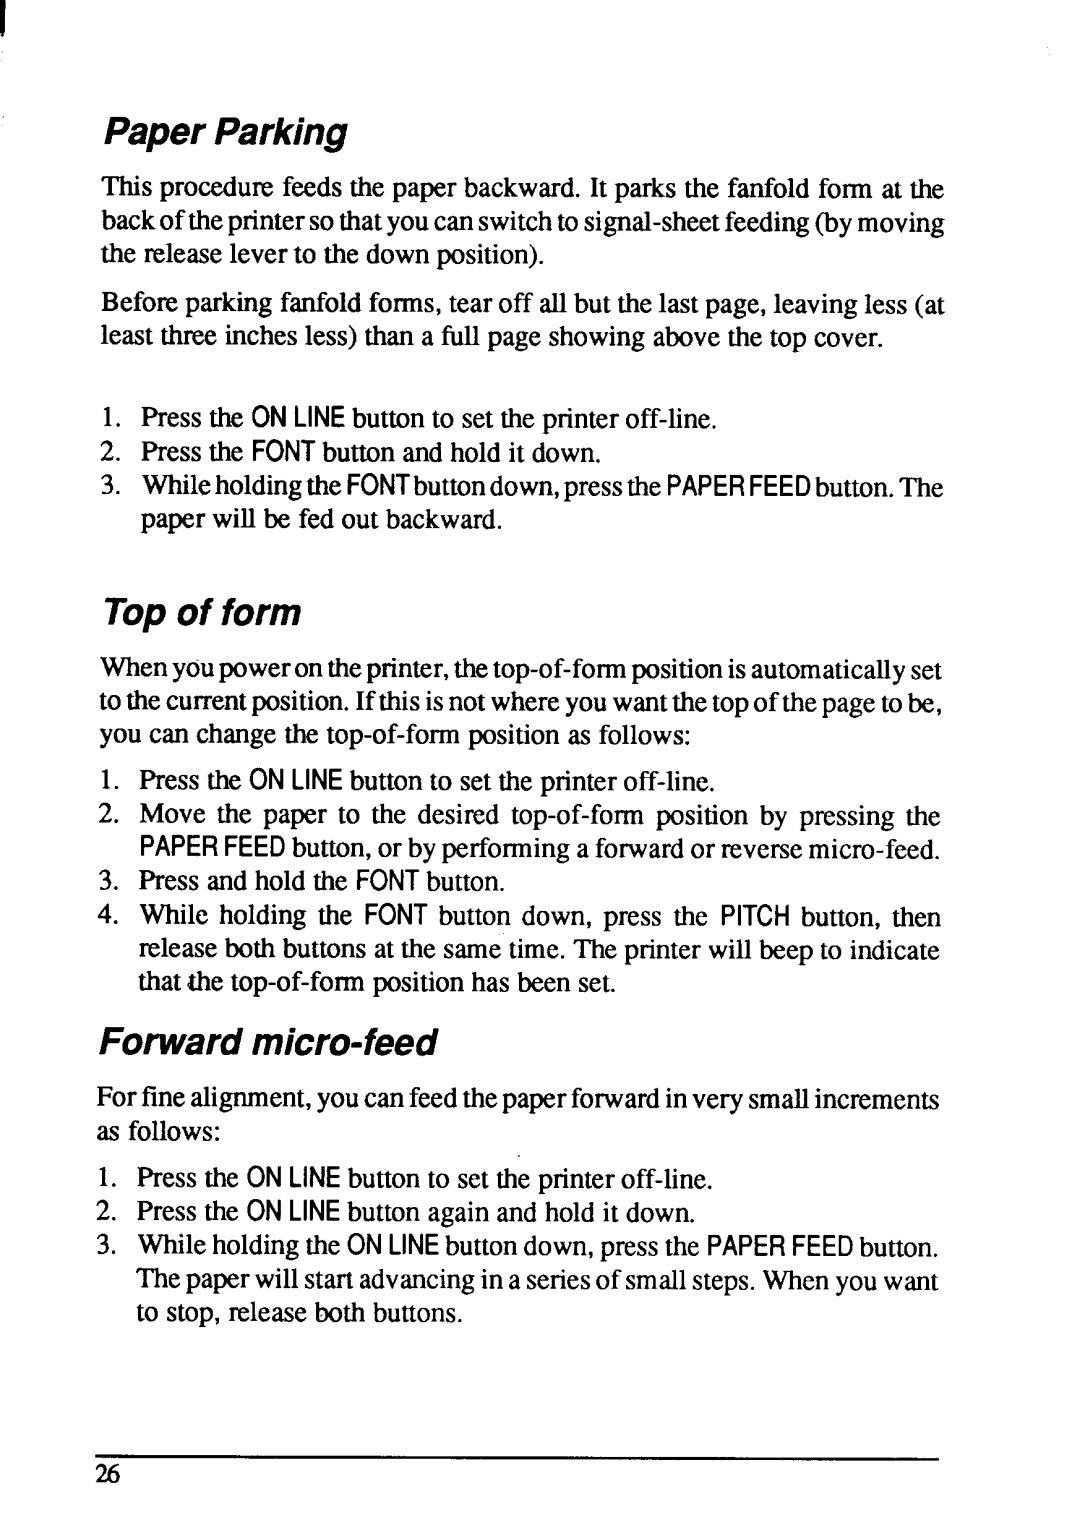 Star Micronics NX-1001 manual Paper Parking, Topof form, Forwardmicro-feed, 4. W 